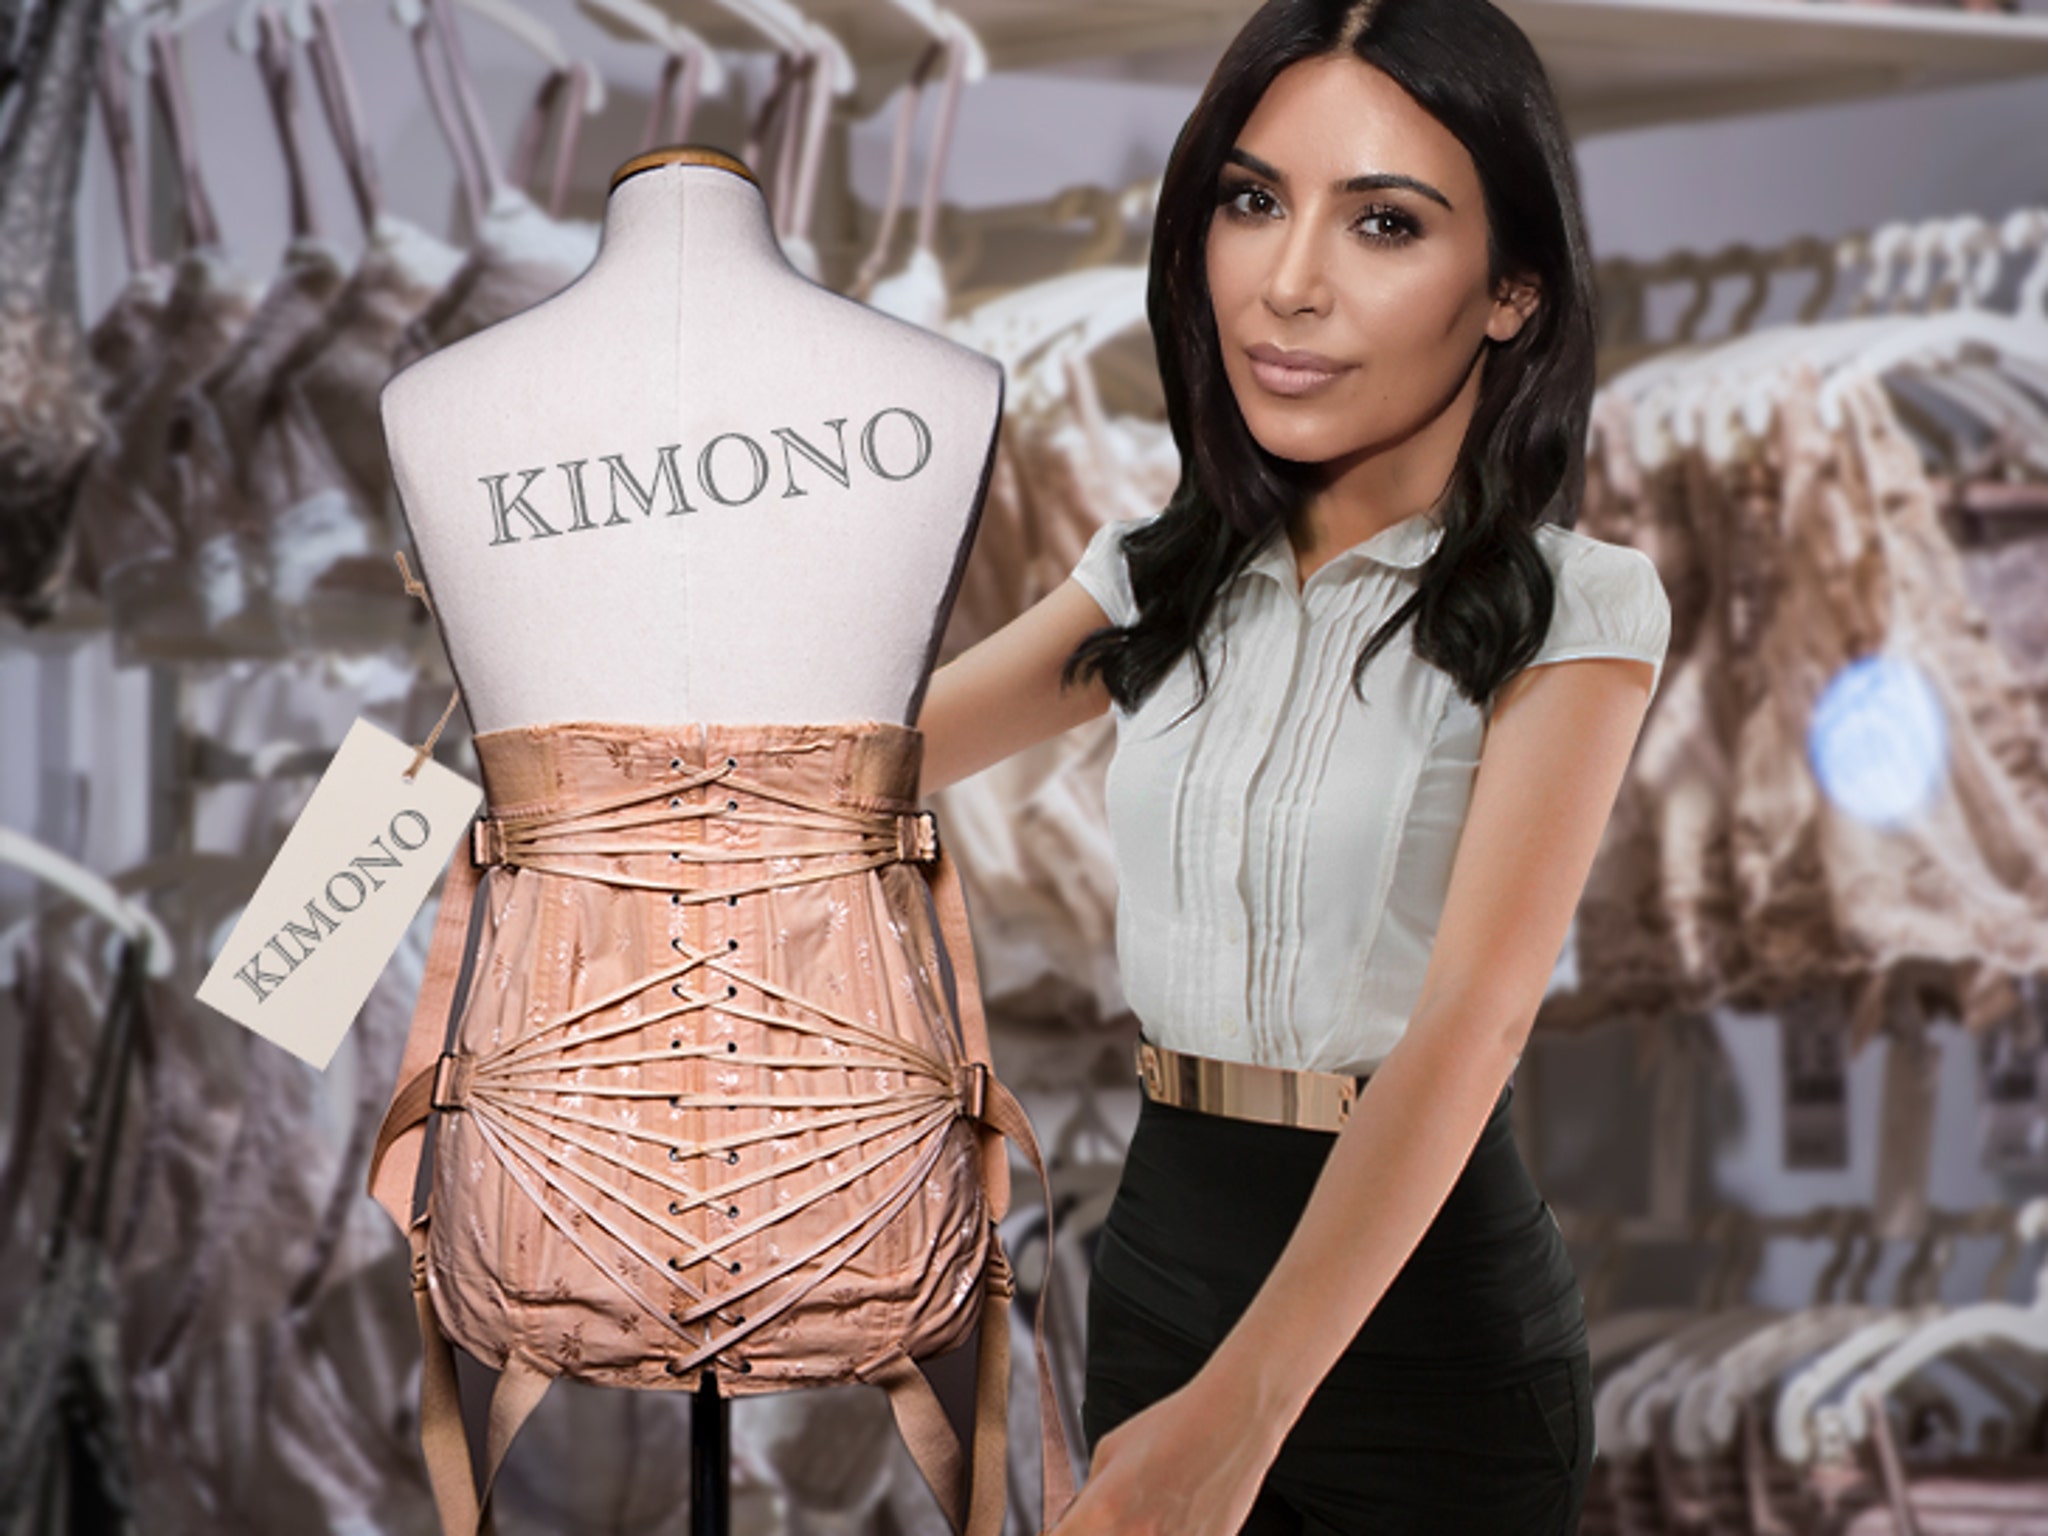 Kim Kardashian Kimono lingerie line sparks Japanese anger